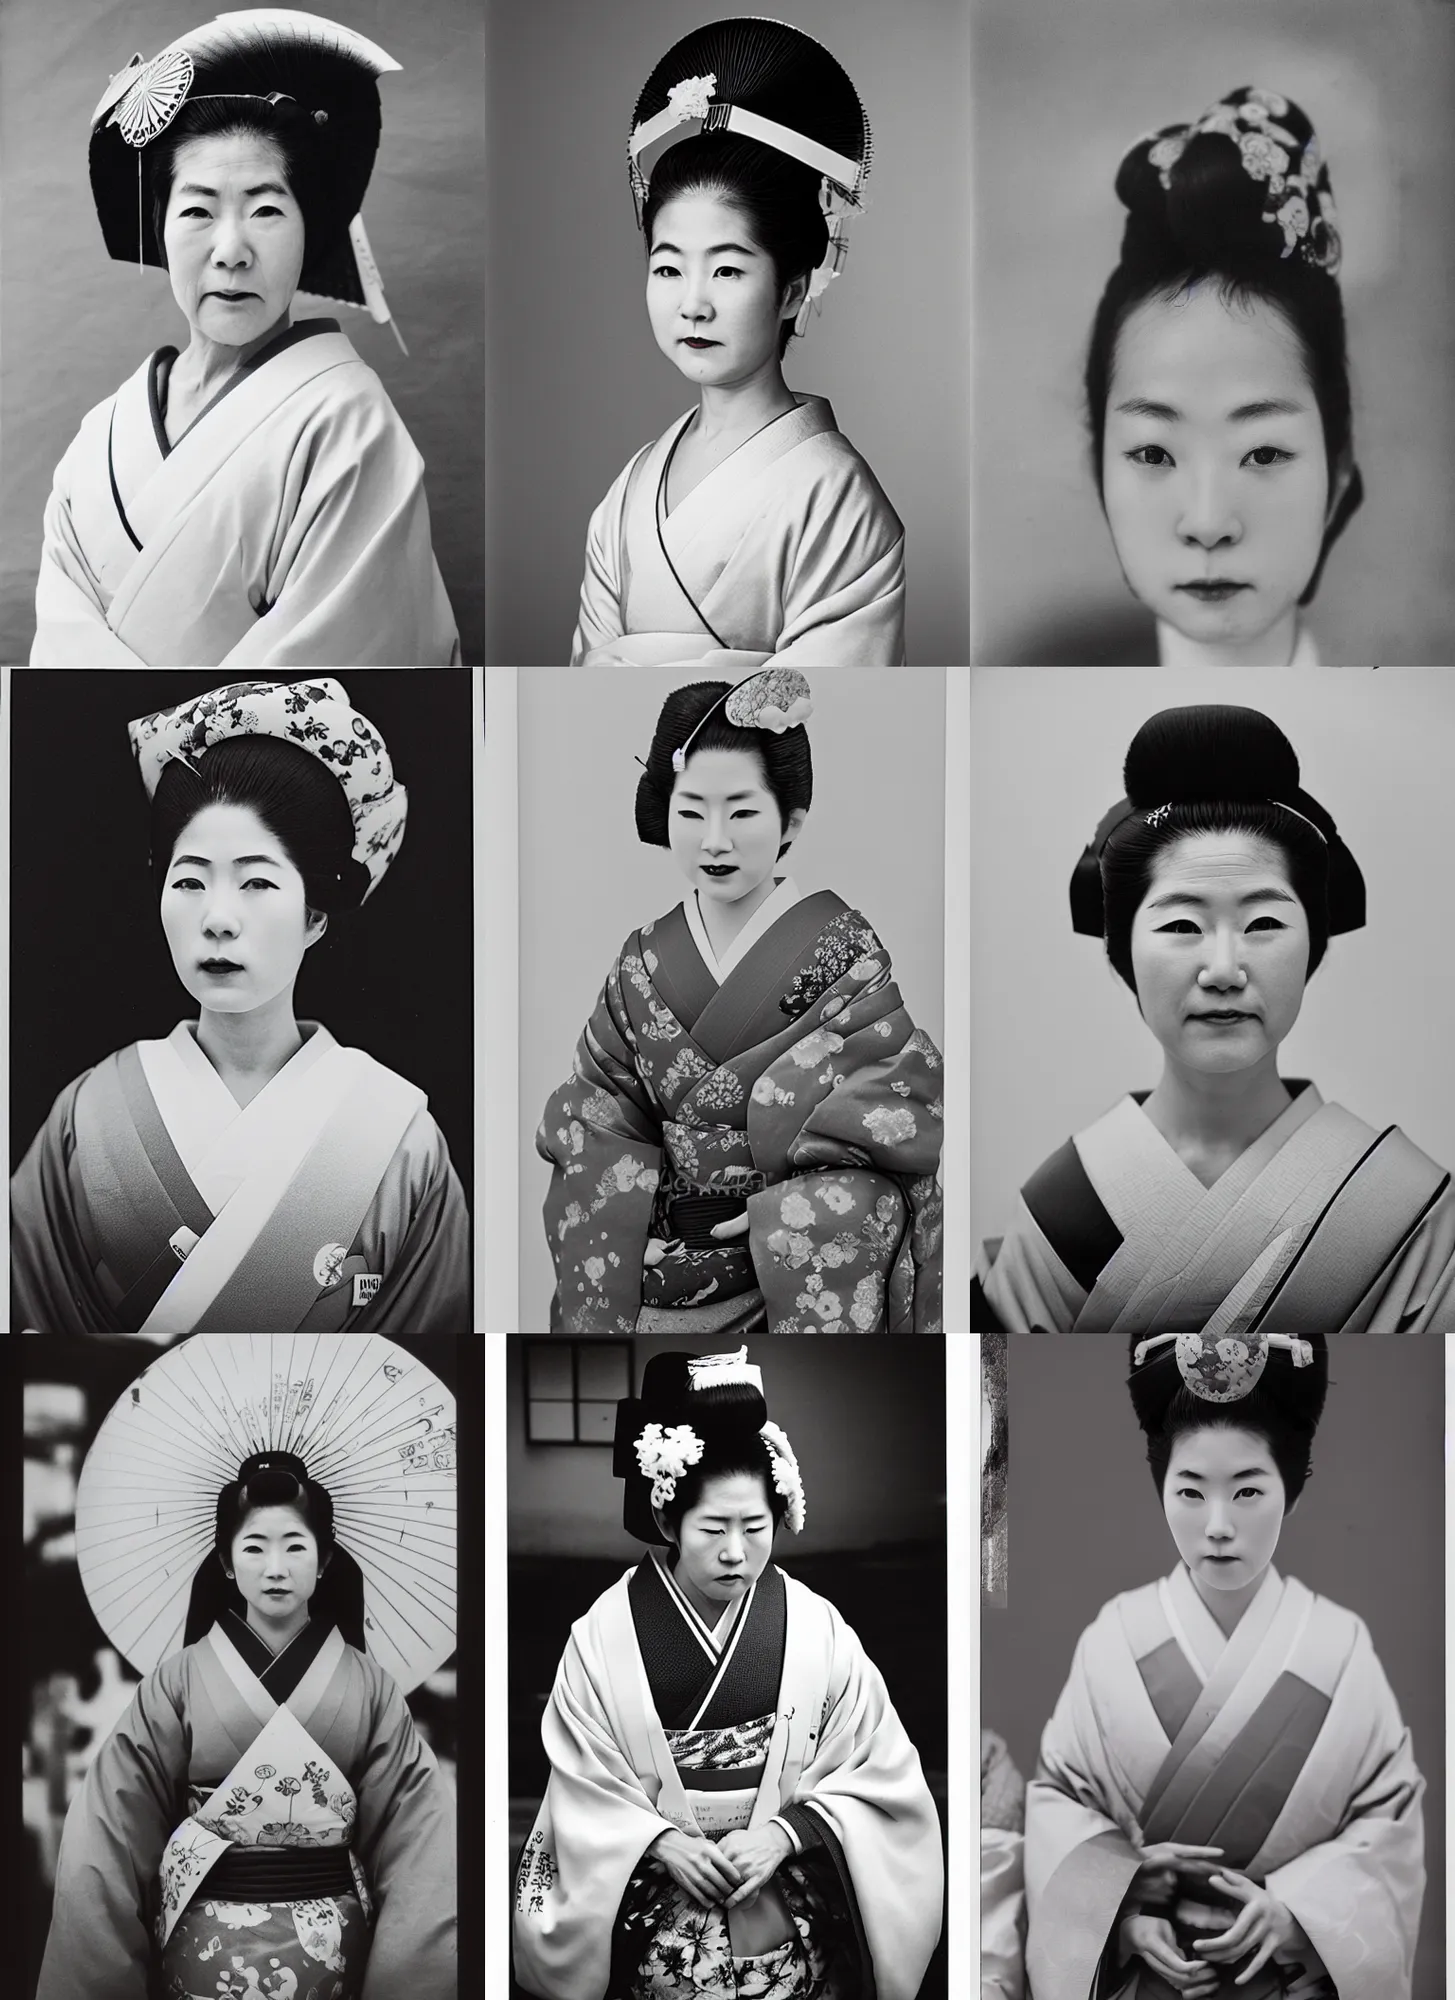 Prompt: Portrait Photograph of a Japanese Geisha Kentmere 100